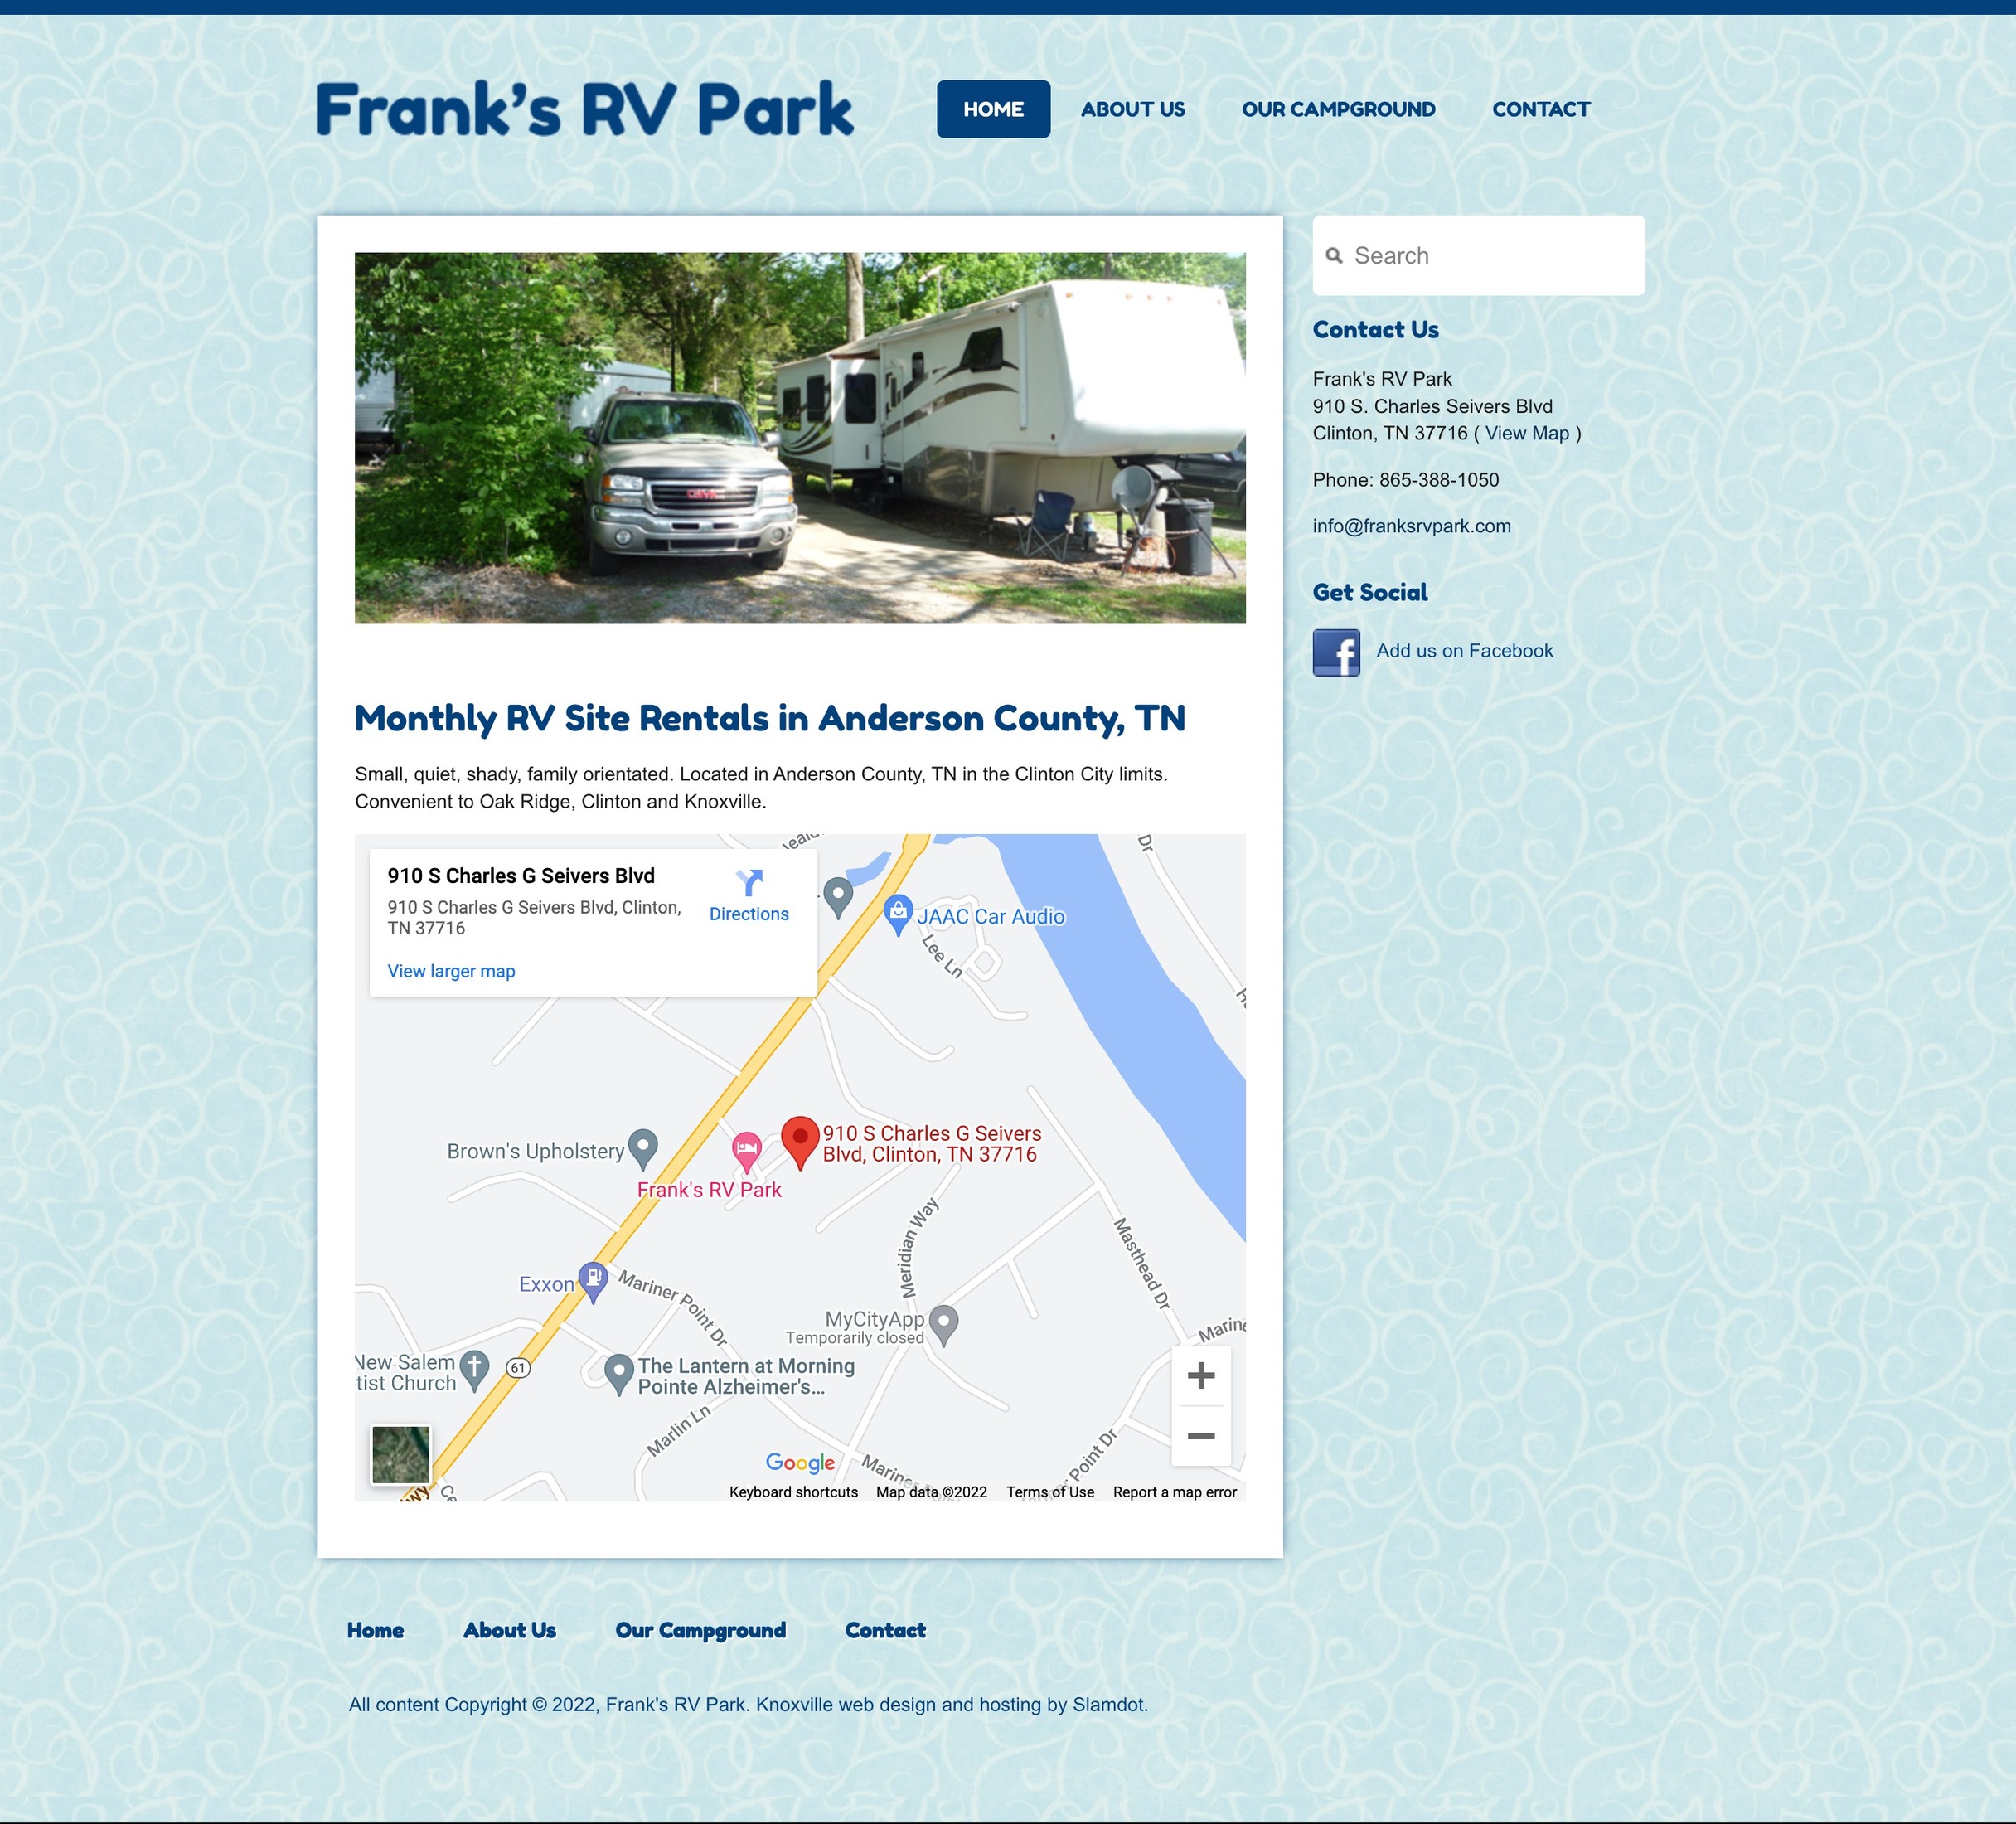 Frank's RV Park